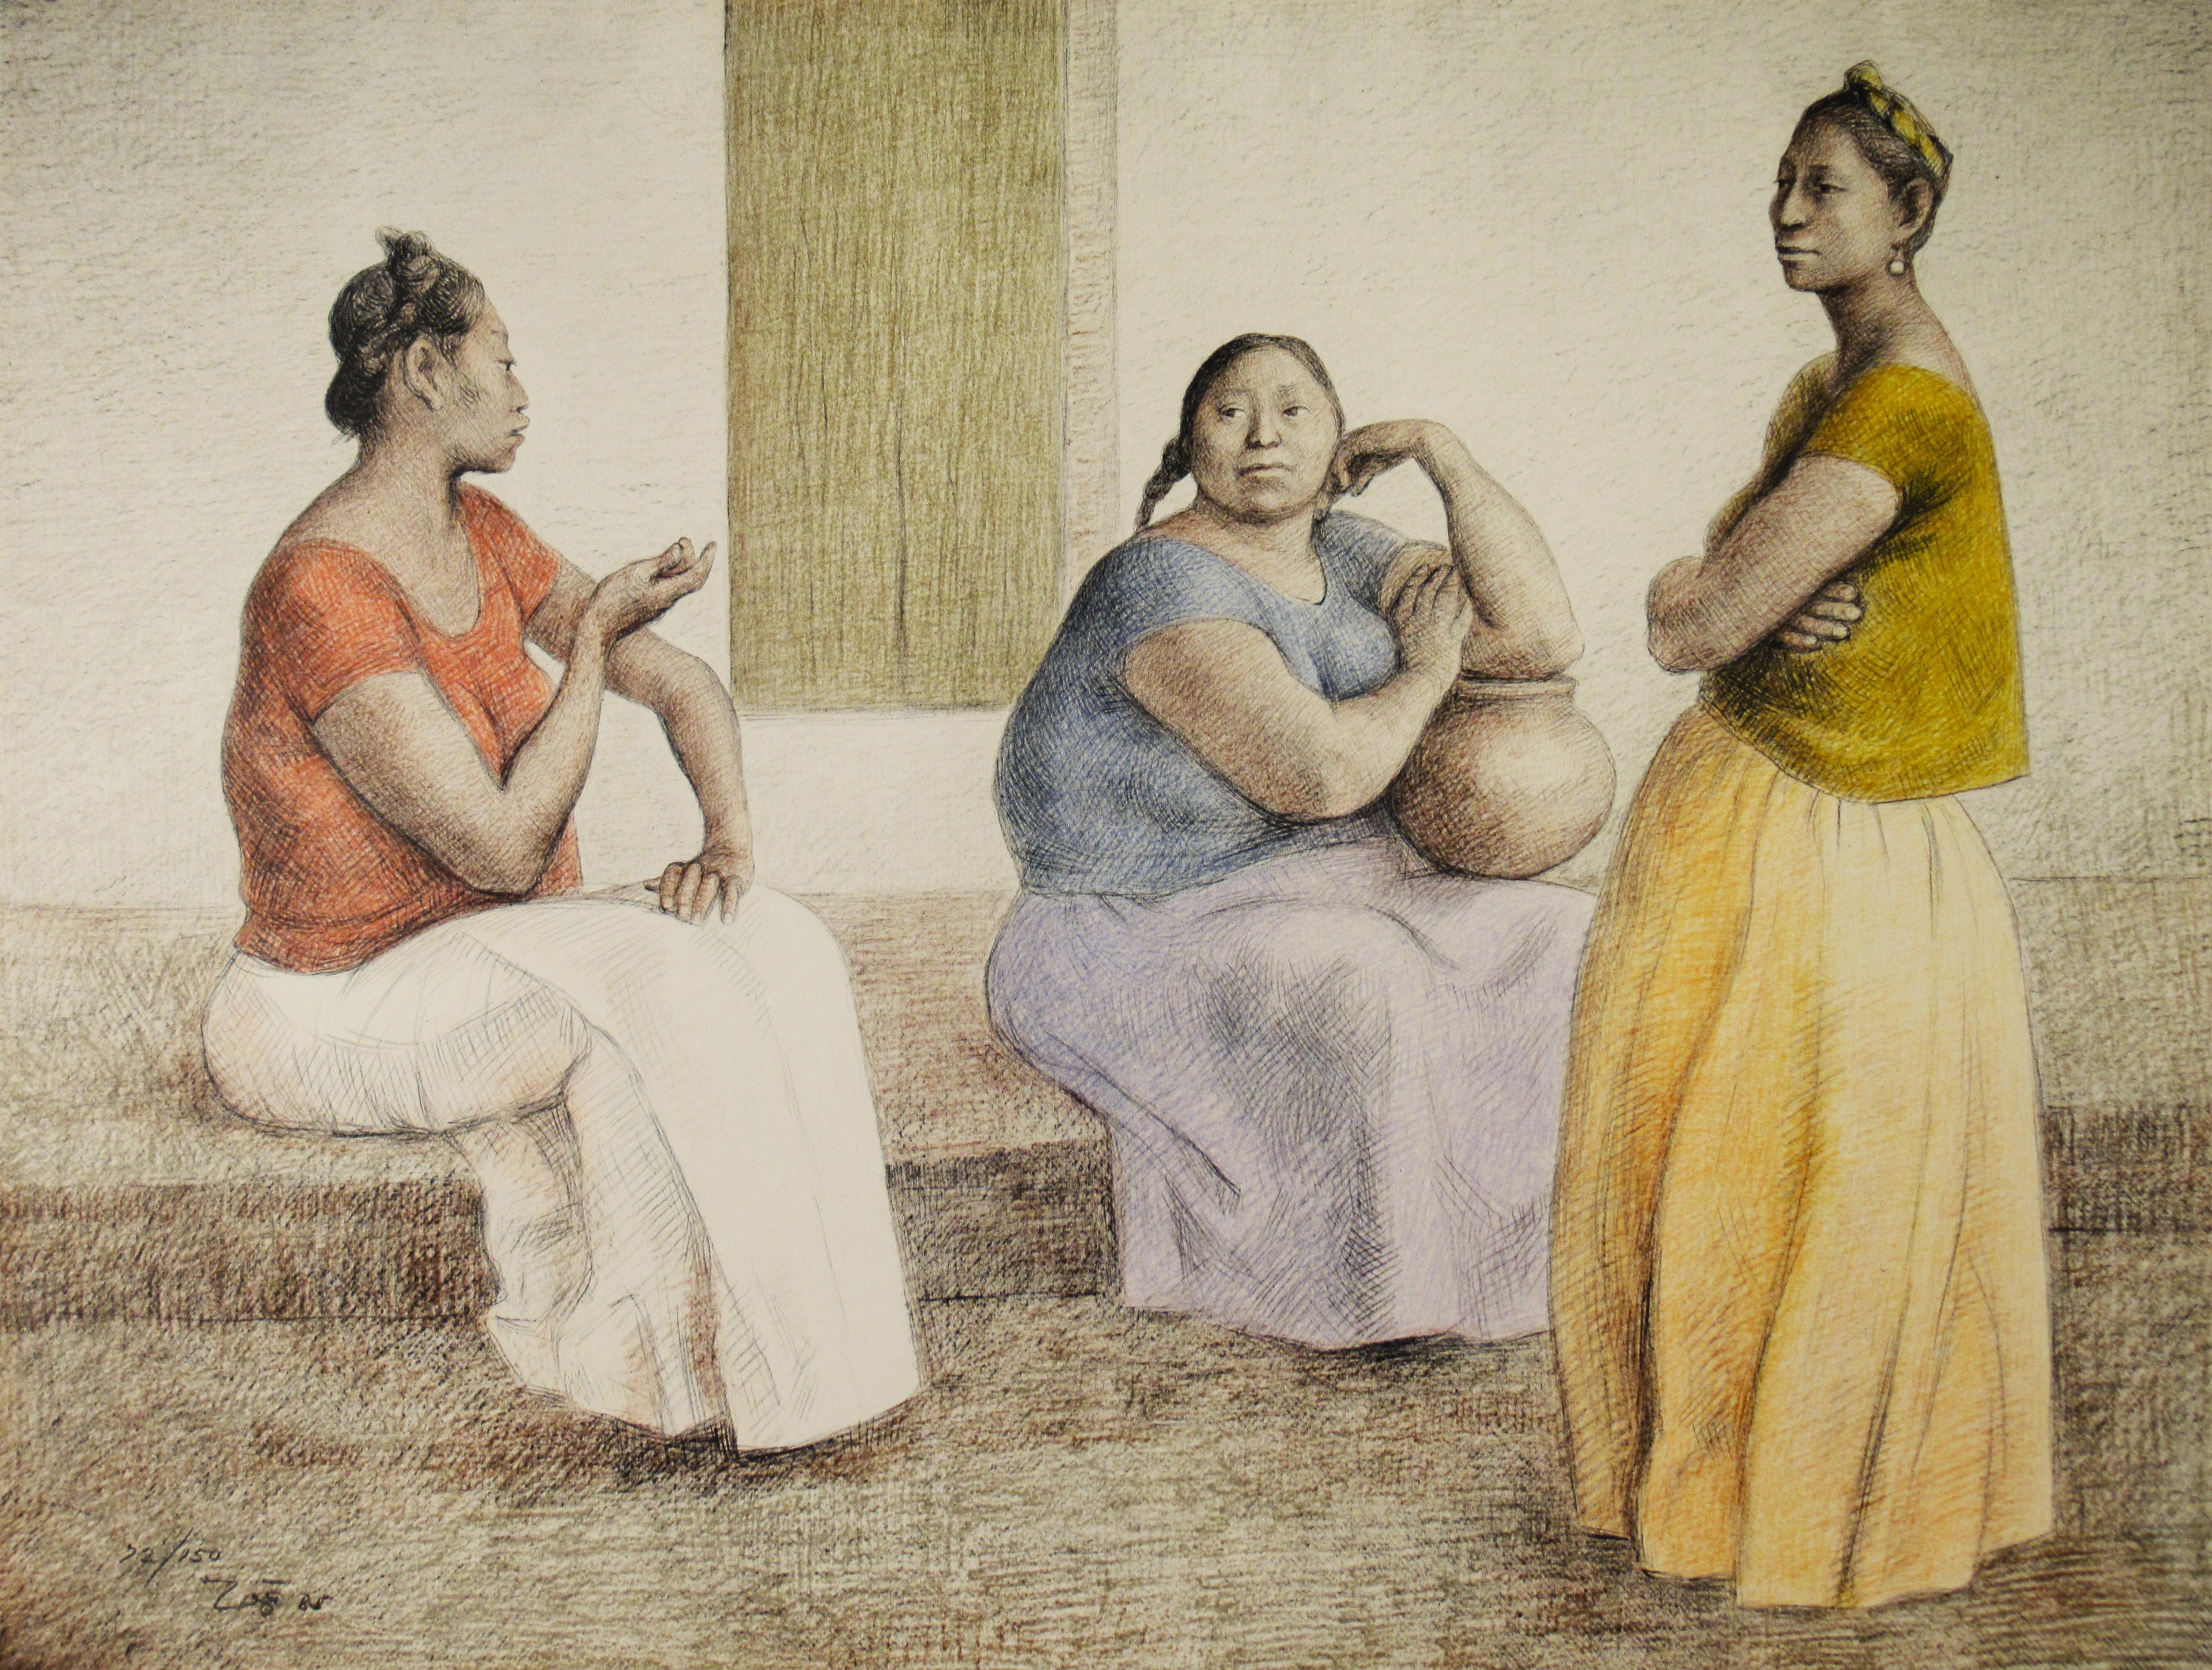 Figurative Print Francisco Zúñiga - Le Platicando de Juchiteca (Femmes juchécoises discutant)